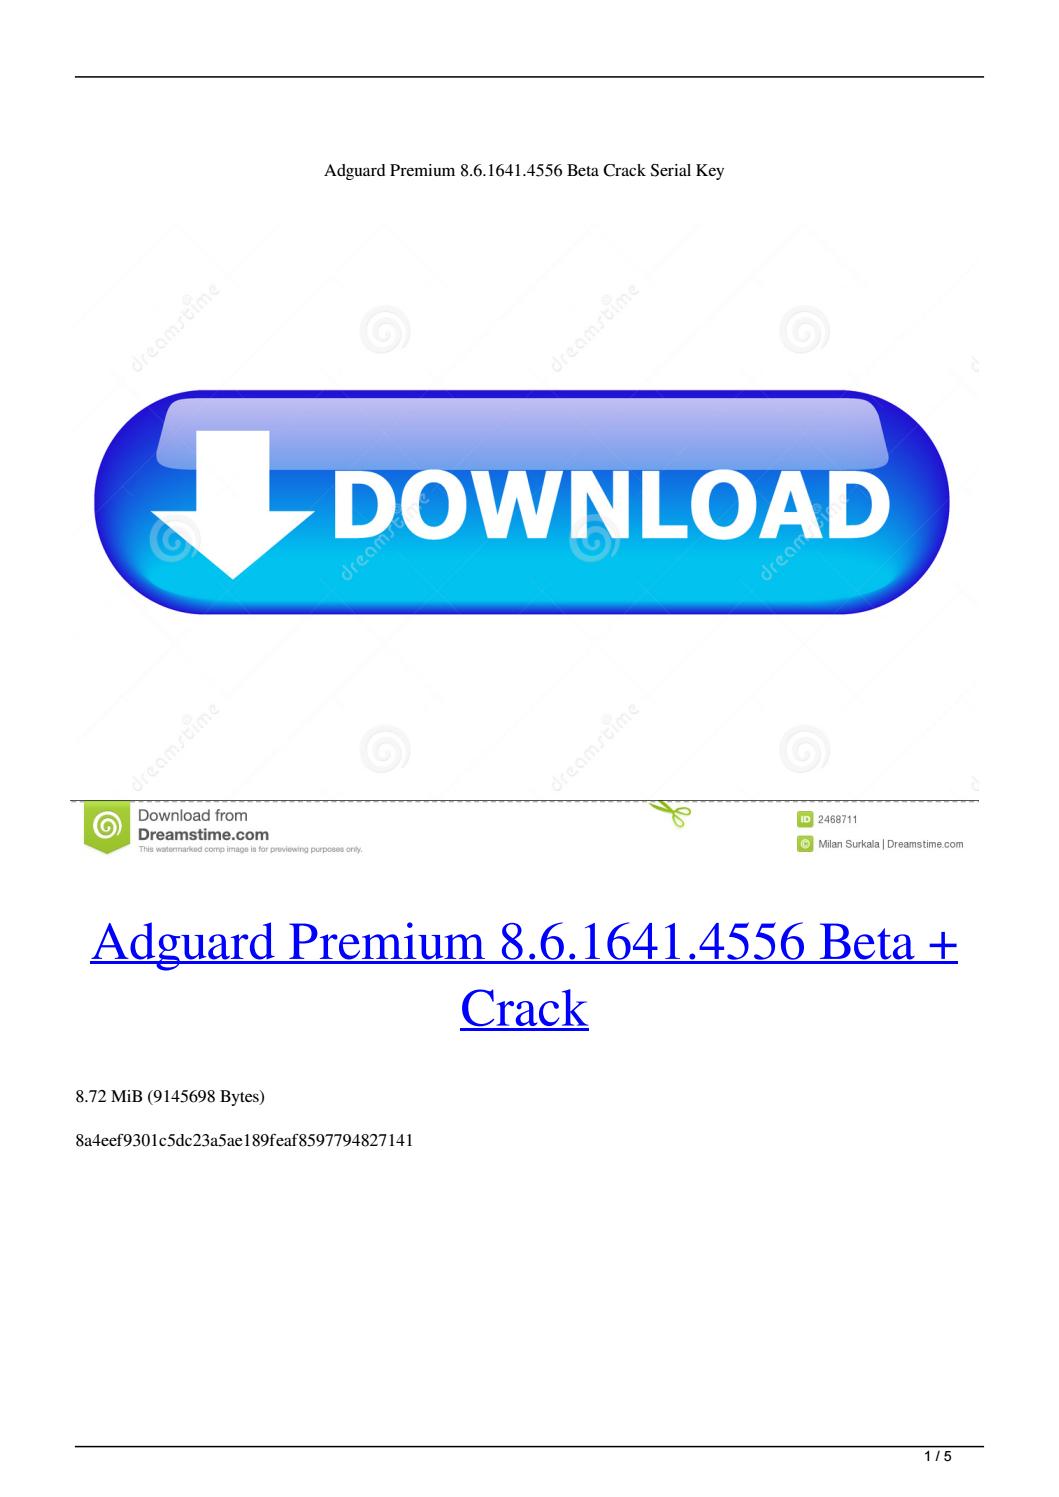 Adguard pro torrent download